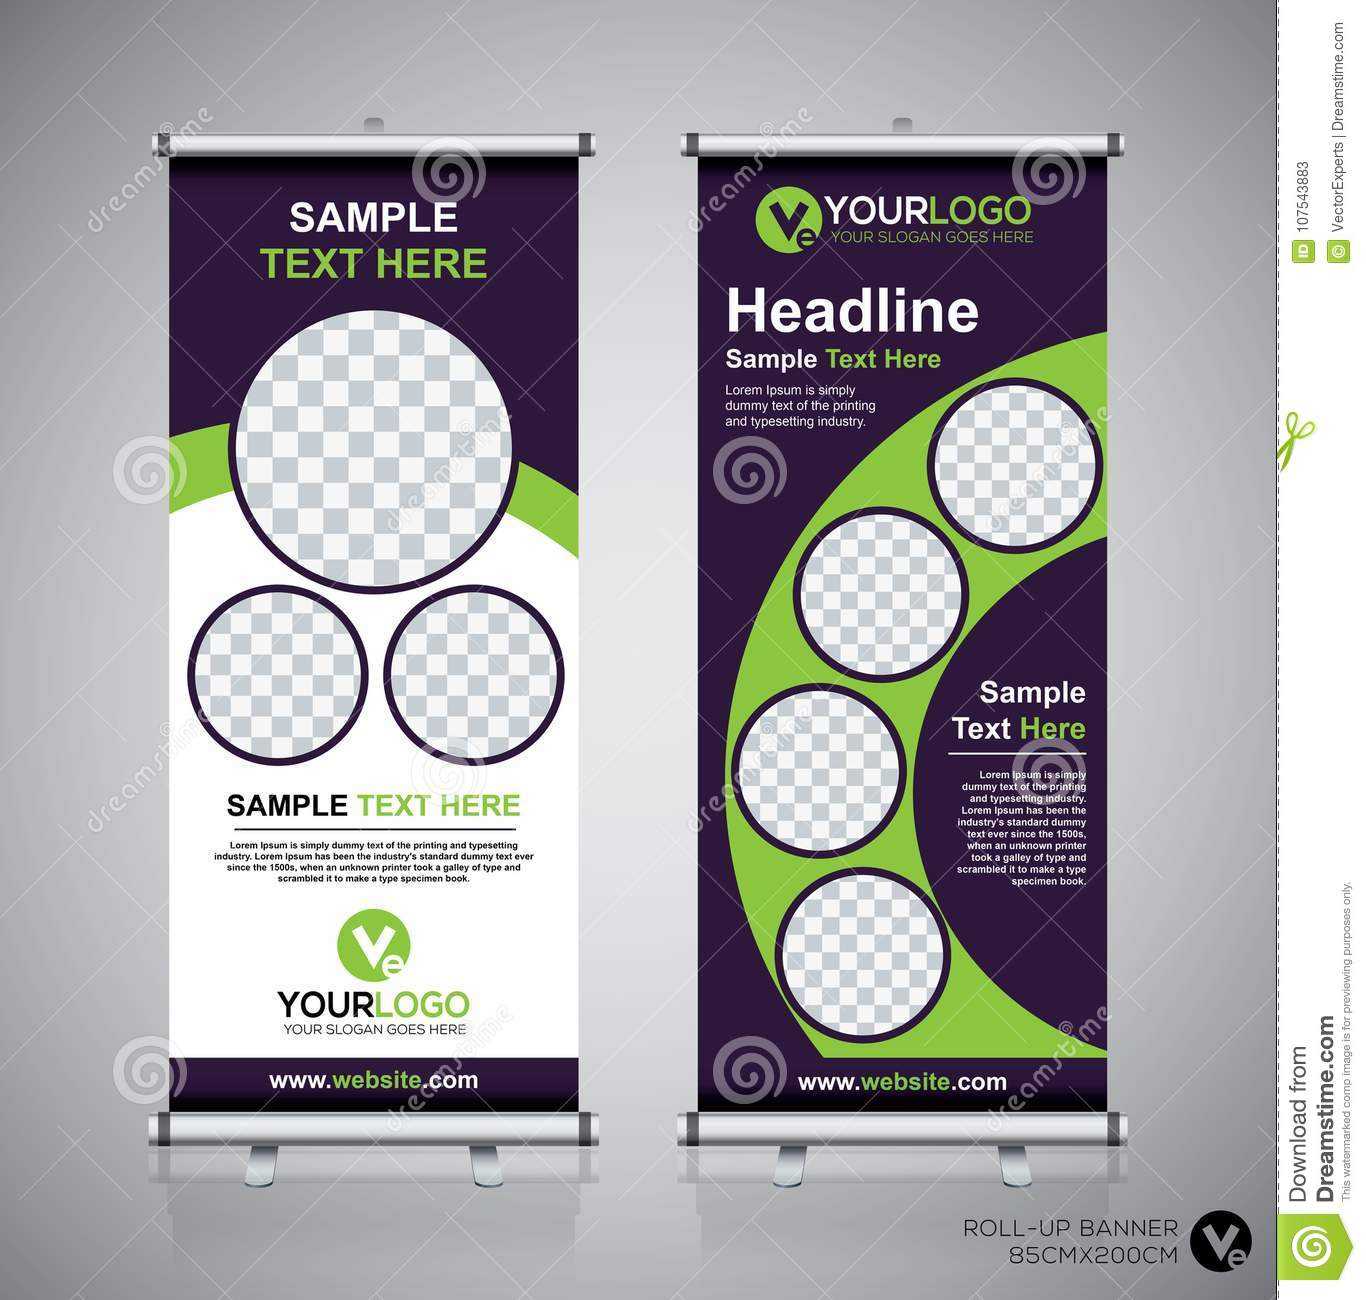 Roll Up Banner Design Template, Vertical, Abstract For Retractable Banner Design Templates